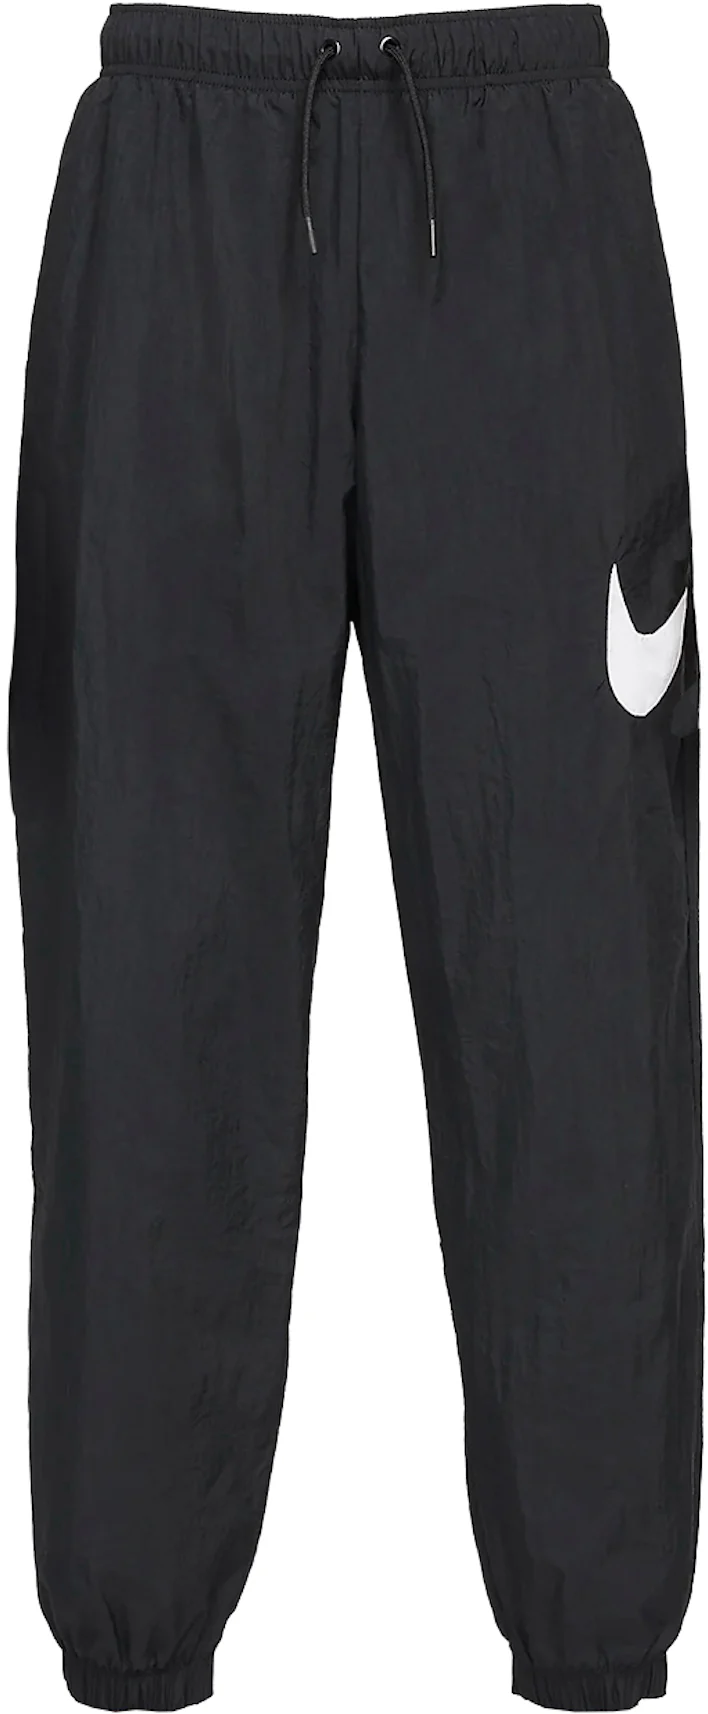 https://images.stockx.com/images/Nike-Womens-Sportswear-Essential-Mid-Rise-Pants-Black-White.jpg?fit=fill&bg=FFFFFF&w=1200&h=857&fm=webp&auto=compress&dpr=2&trim=color&updated_at=1653998273&q=60